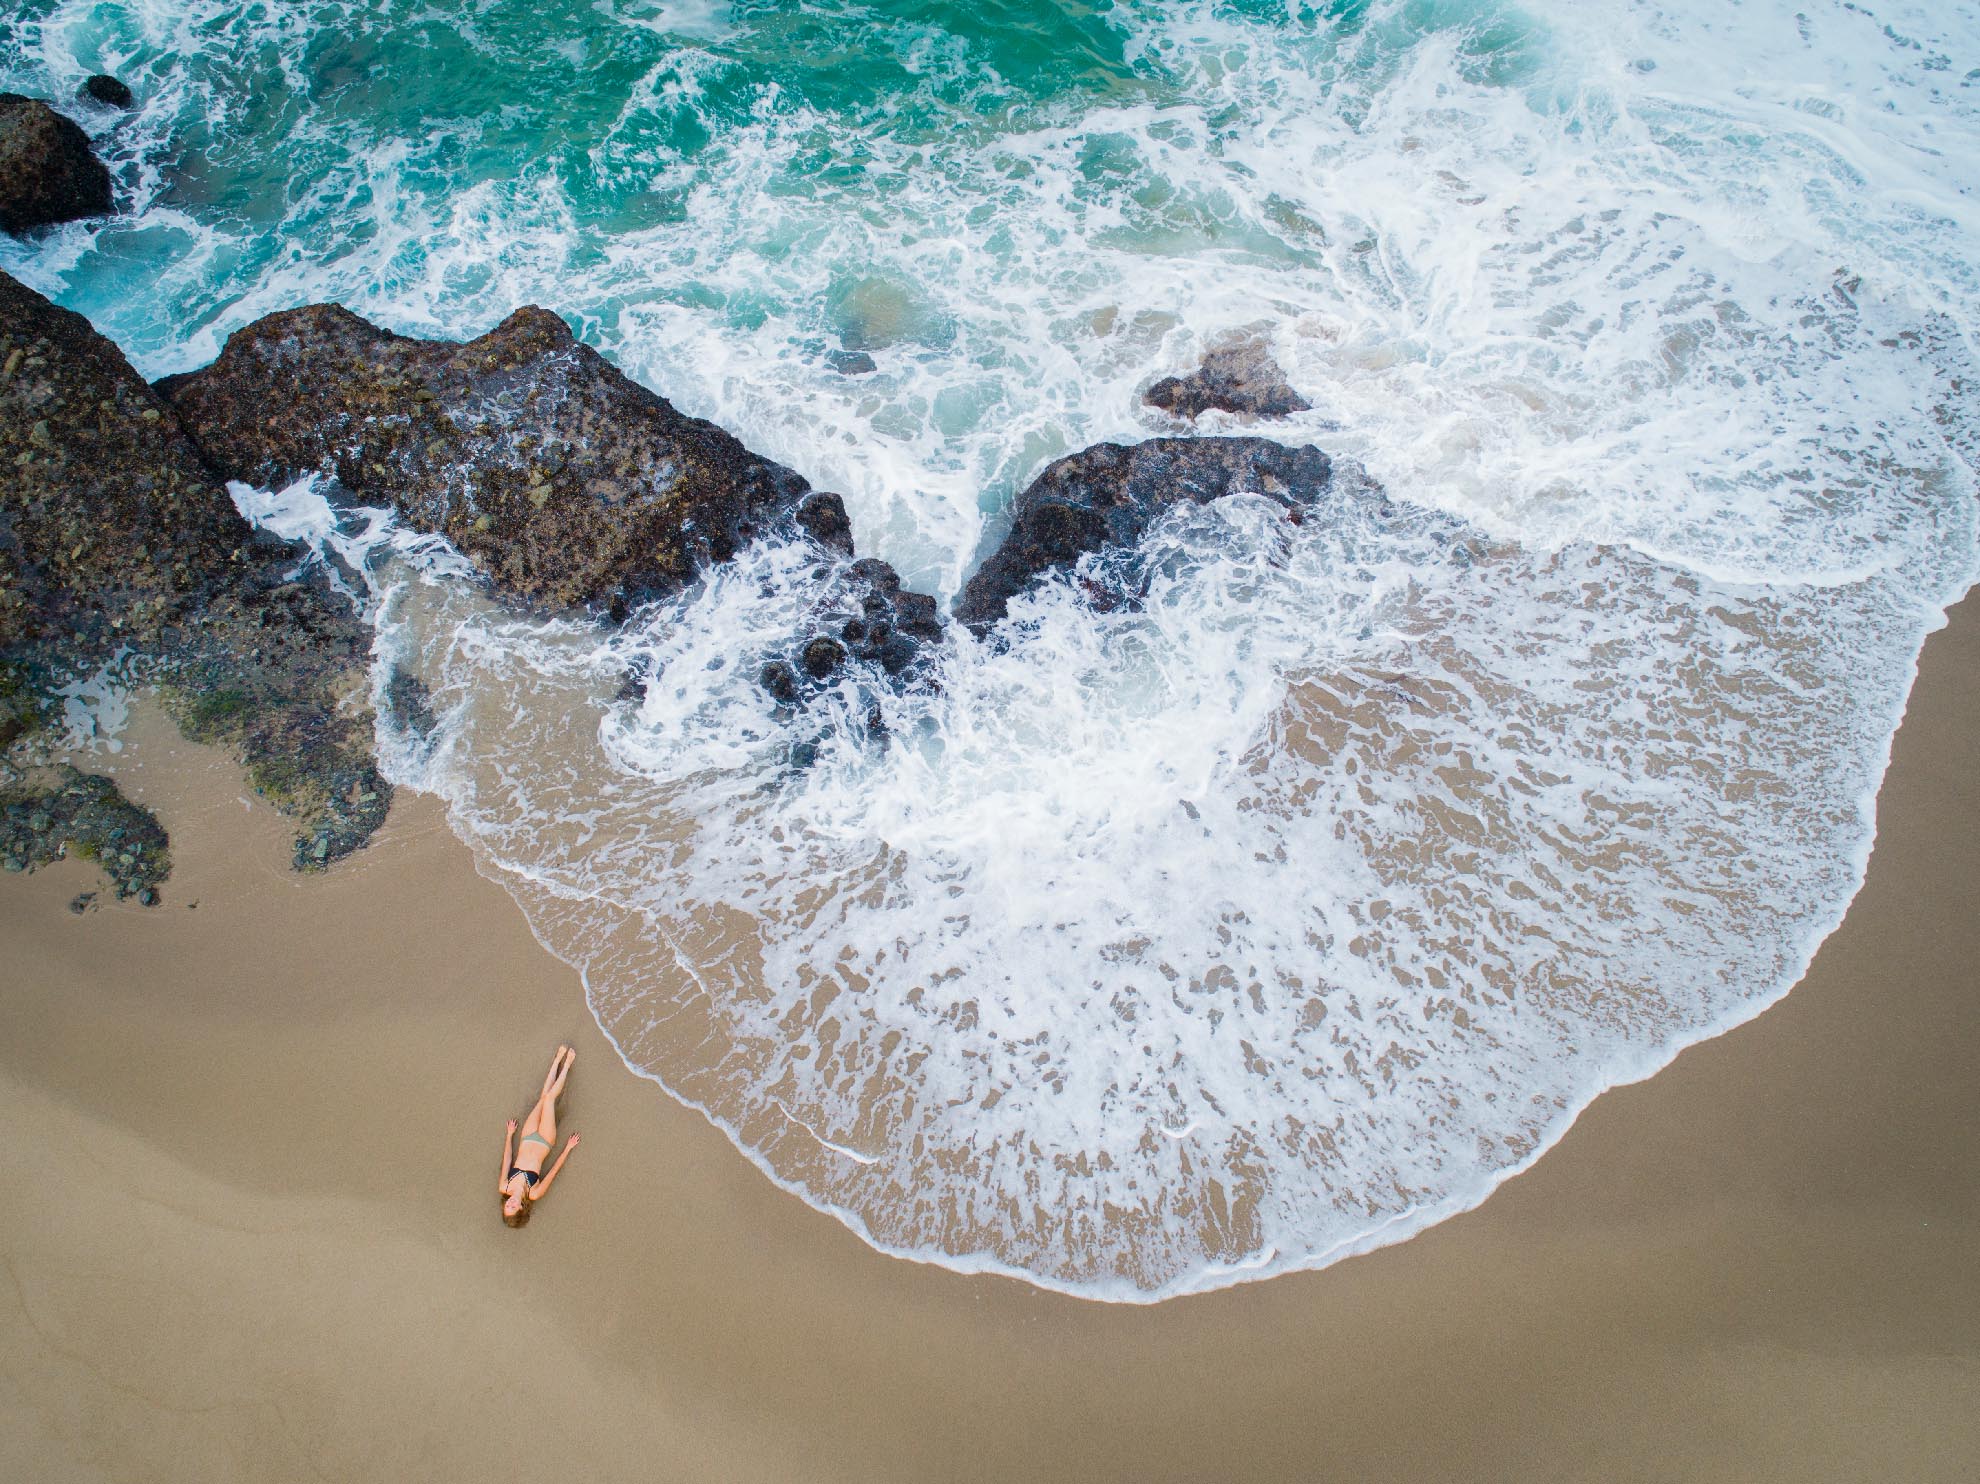 Drone Photograph of birds eye view of woman lying on Table Rock beach California in a bikini